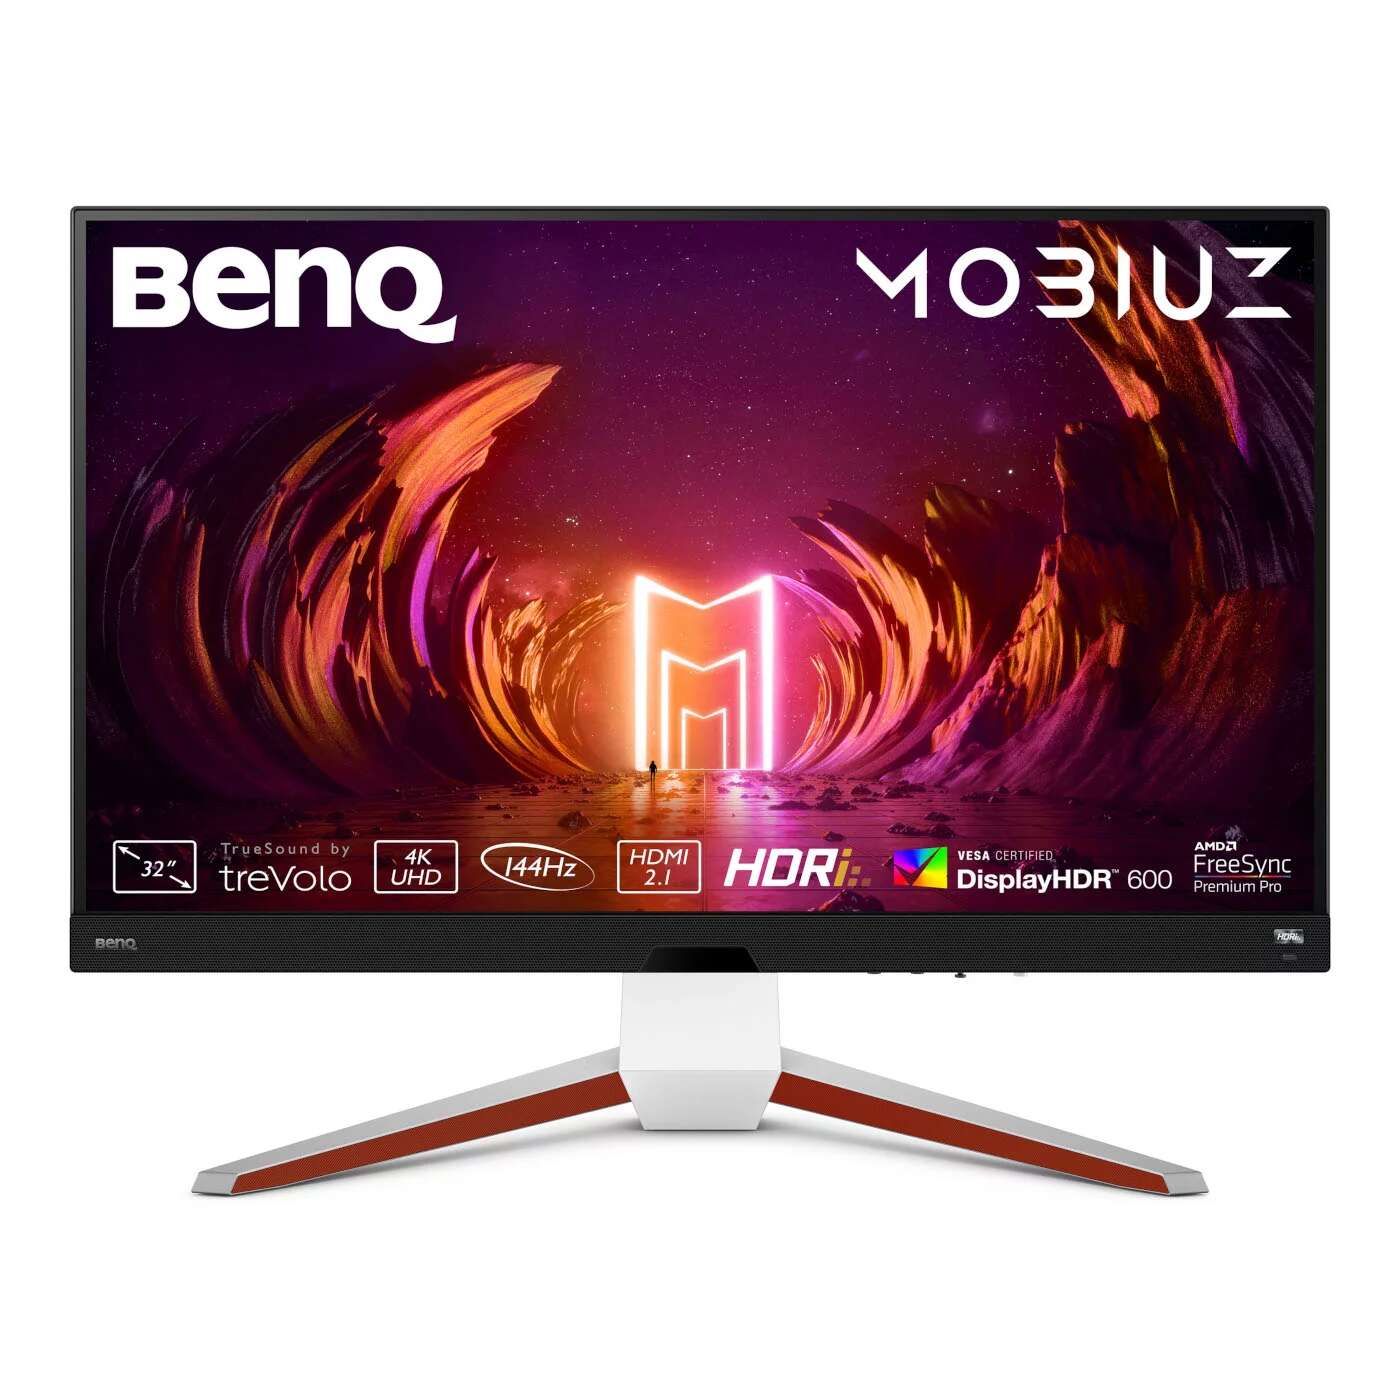 Benq 32" mobiuz ex3210u ívelt gaming monitor